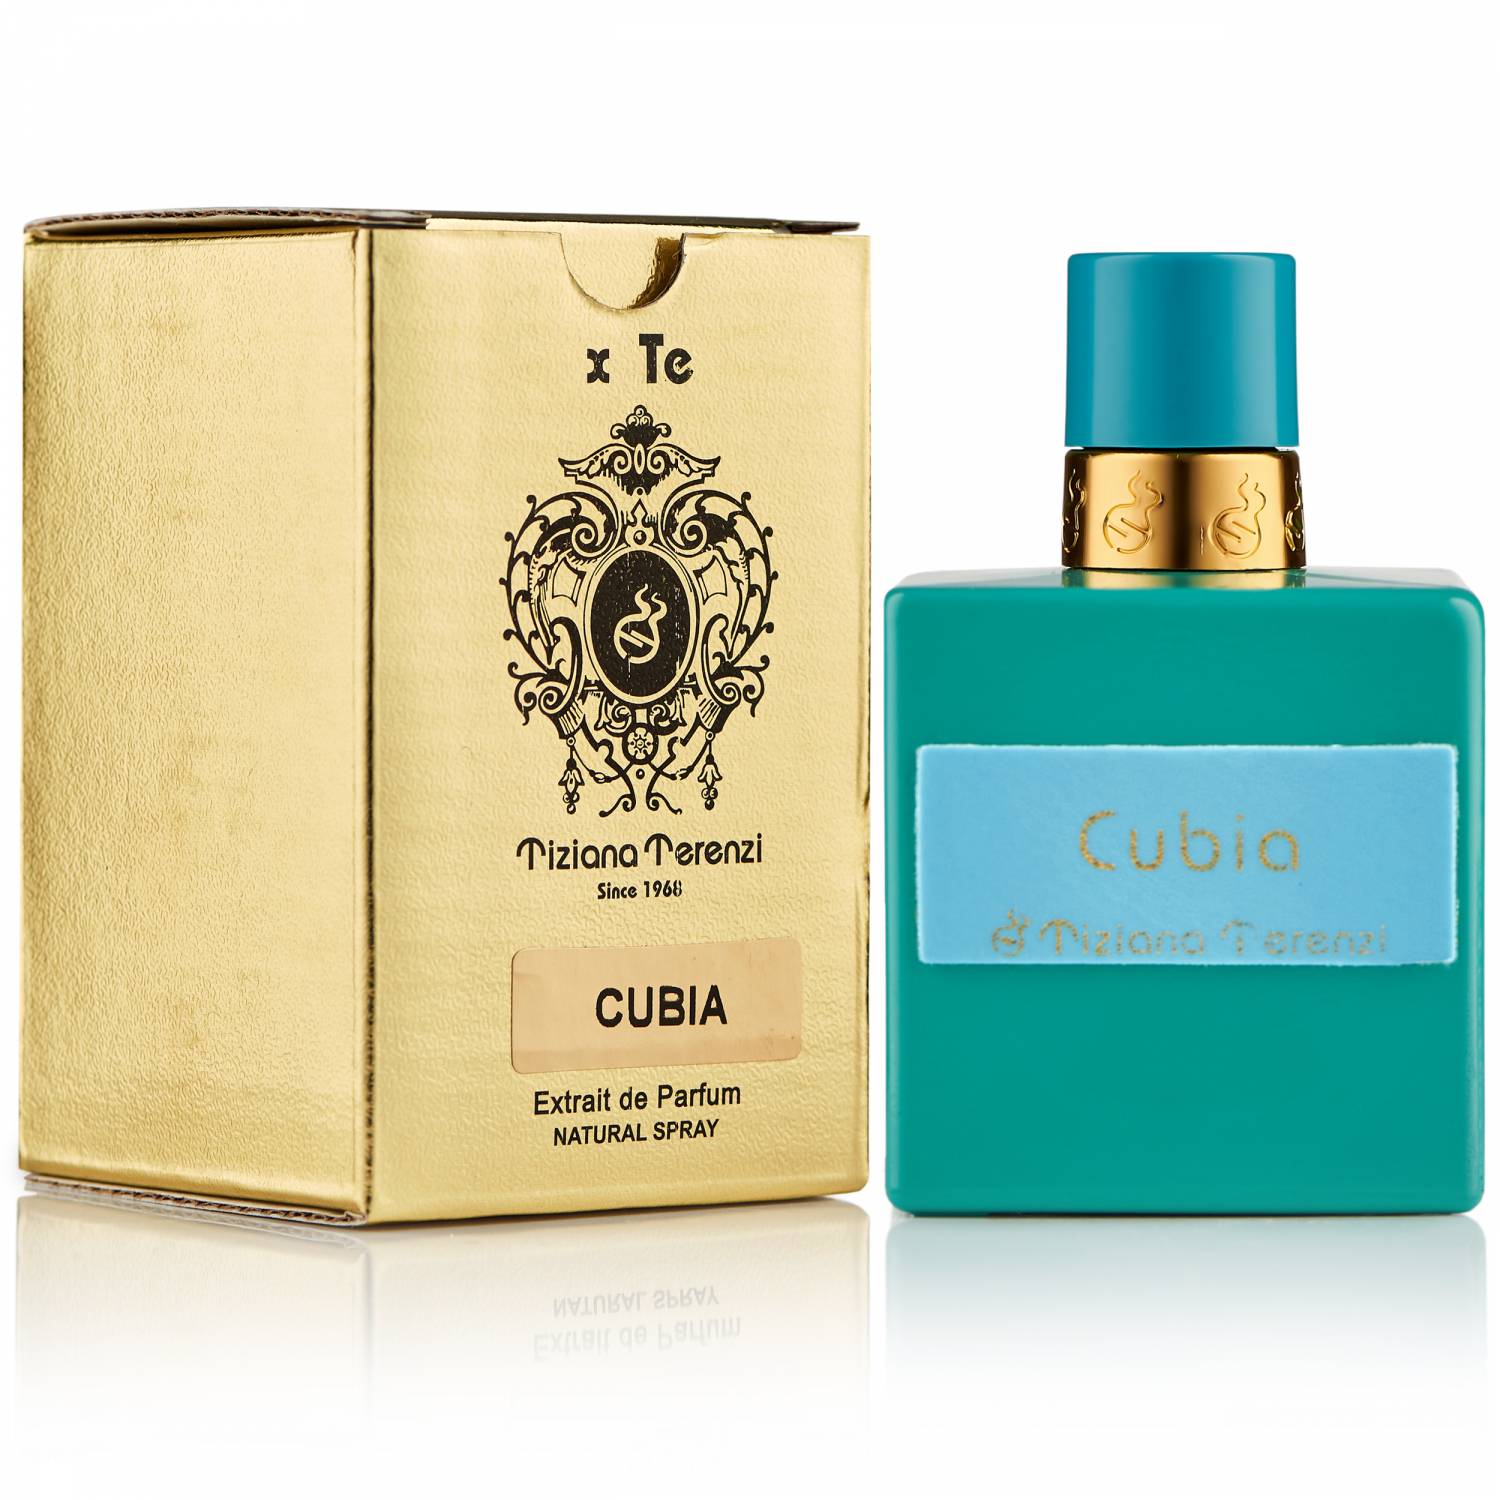 L'Artisan Parfumeur – Fresh Beauty Co.